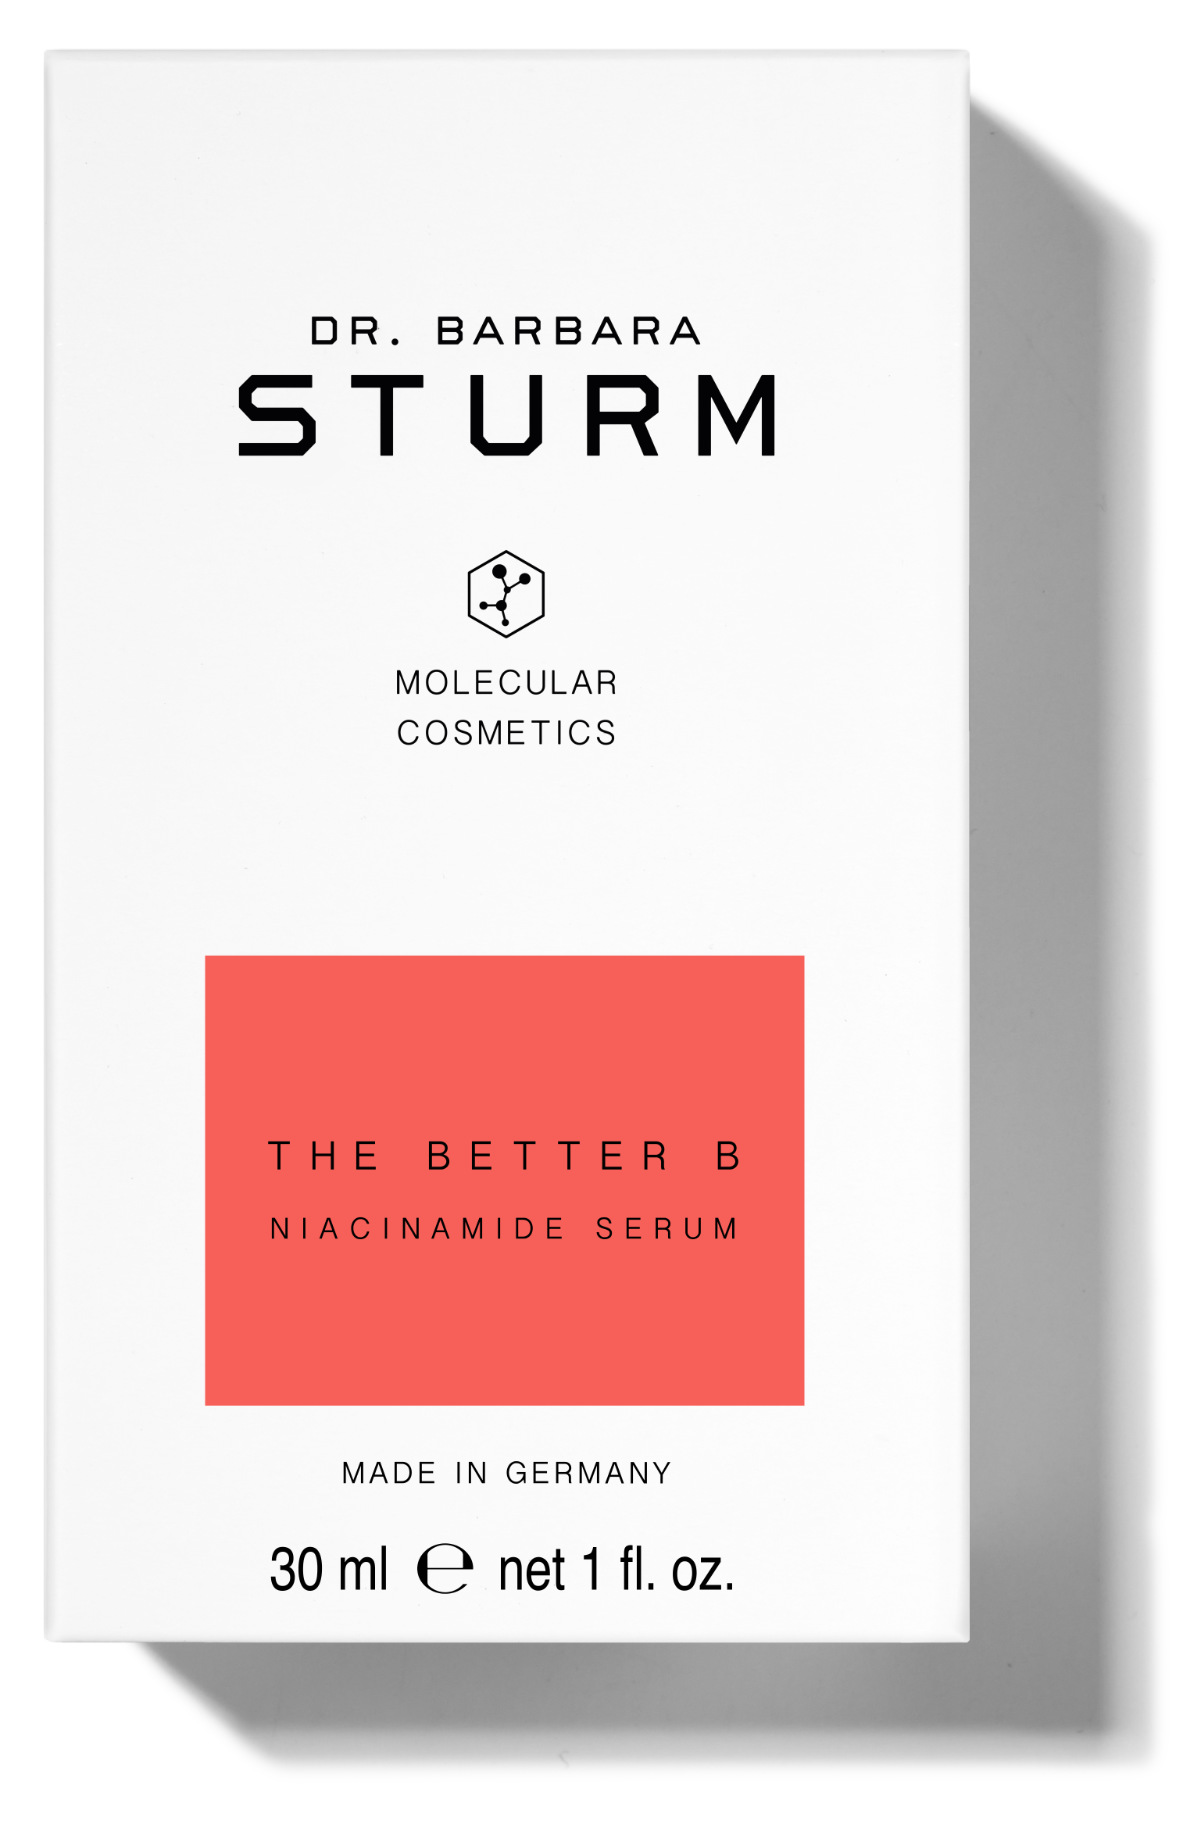 Dr. Barbara Sturm Introduces The Better B Niacinamide Serum